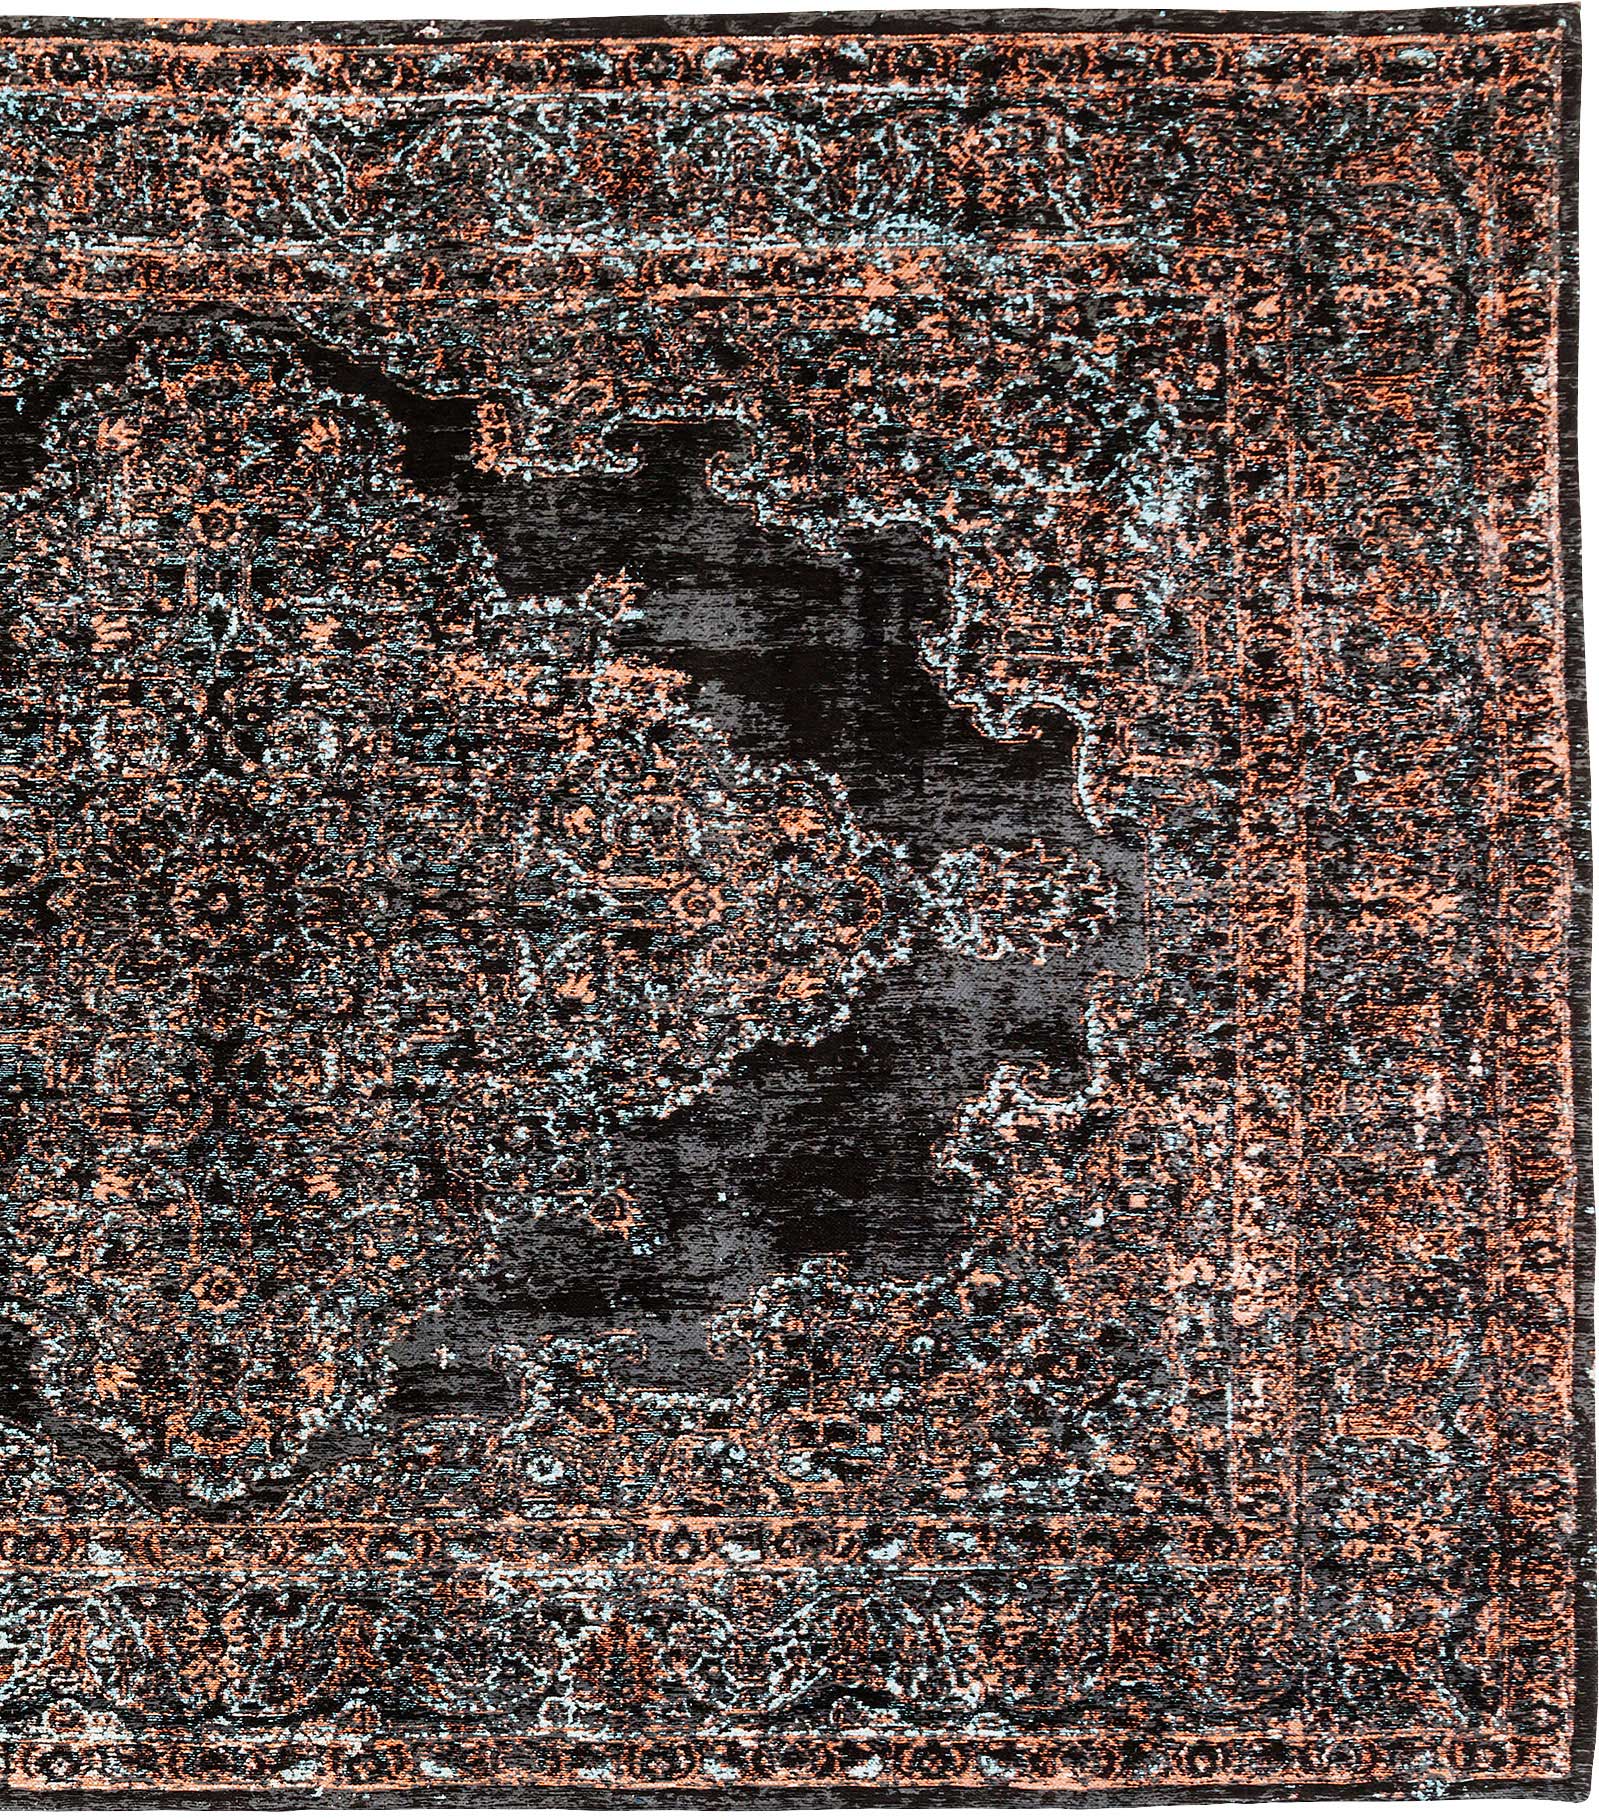 Carpet Kelim Pop Rockstar 240x170cm